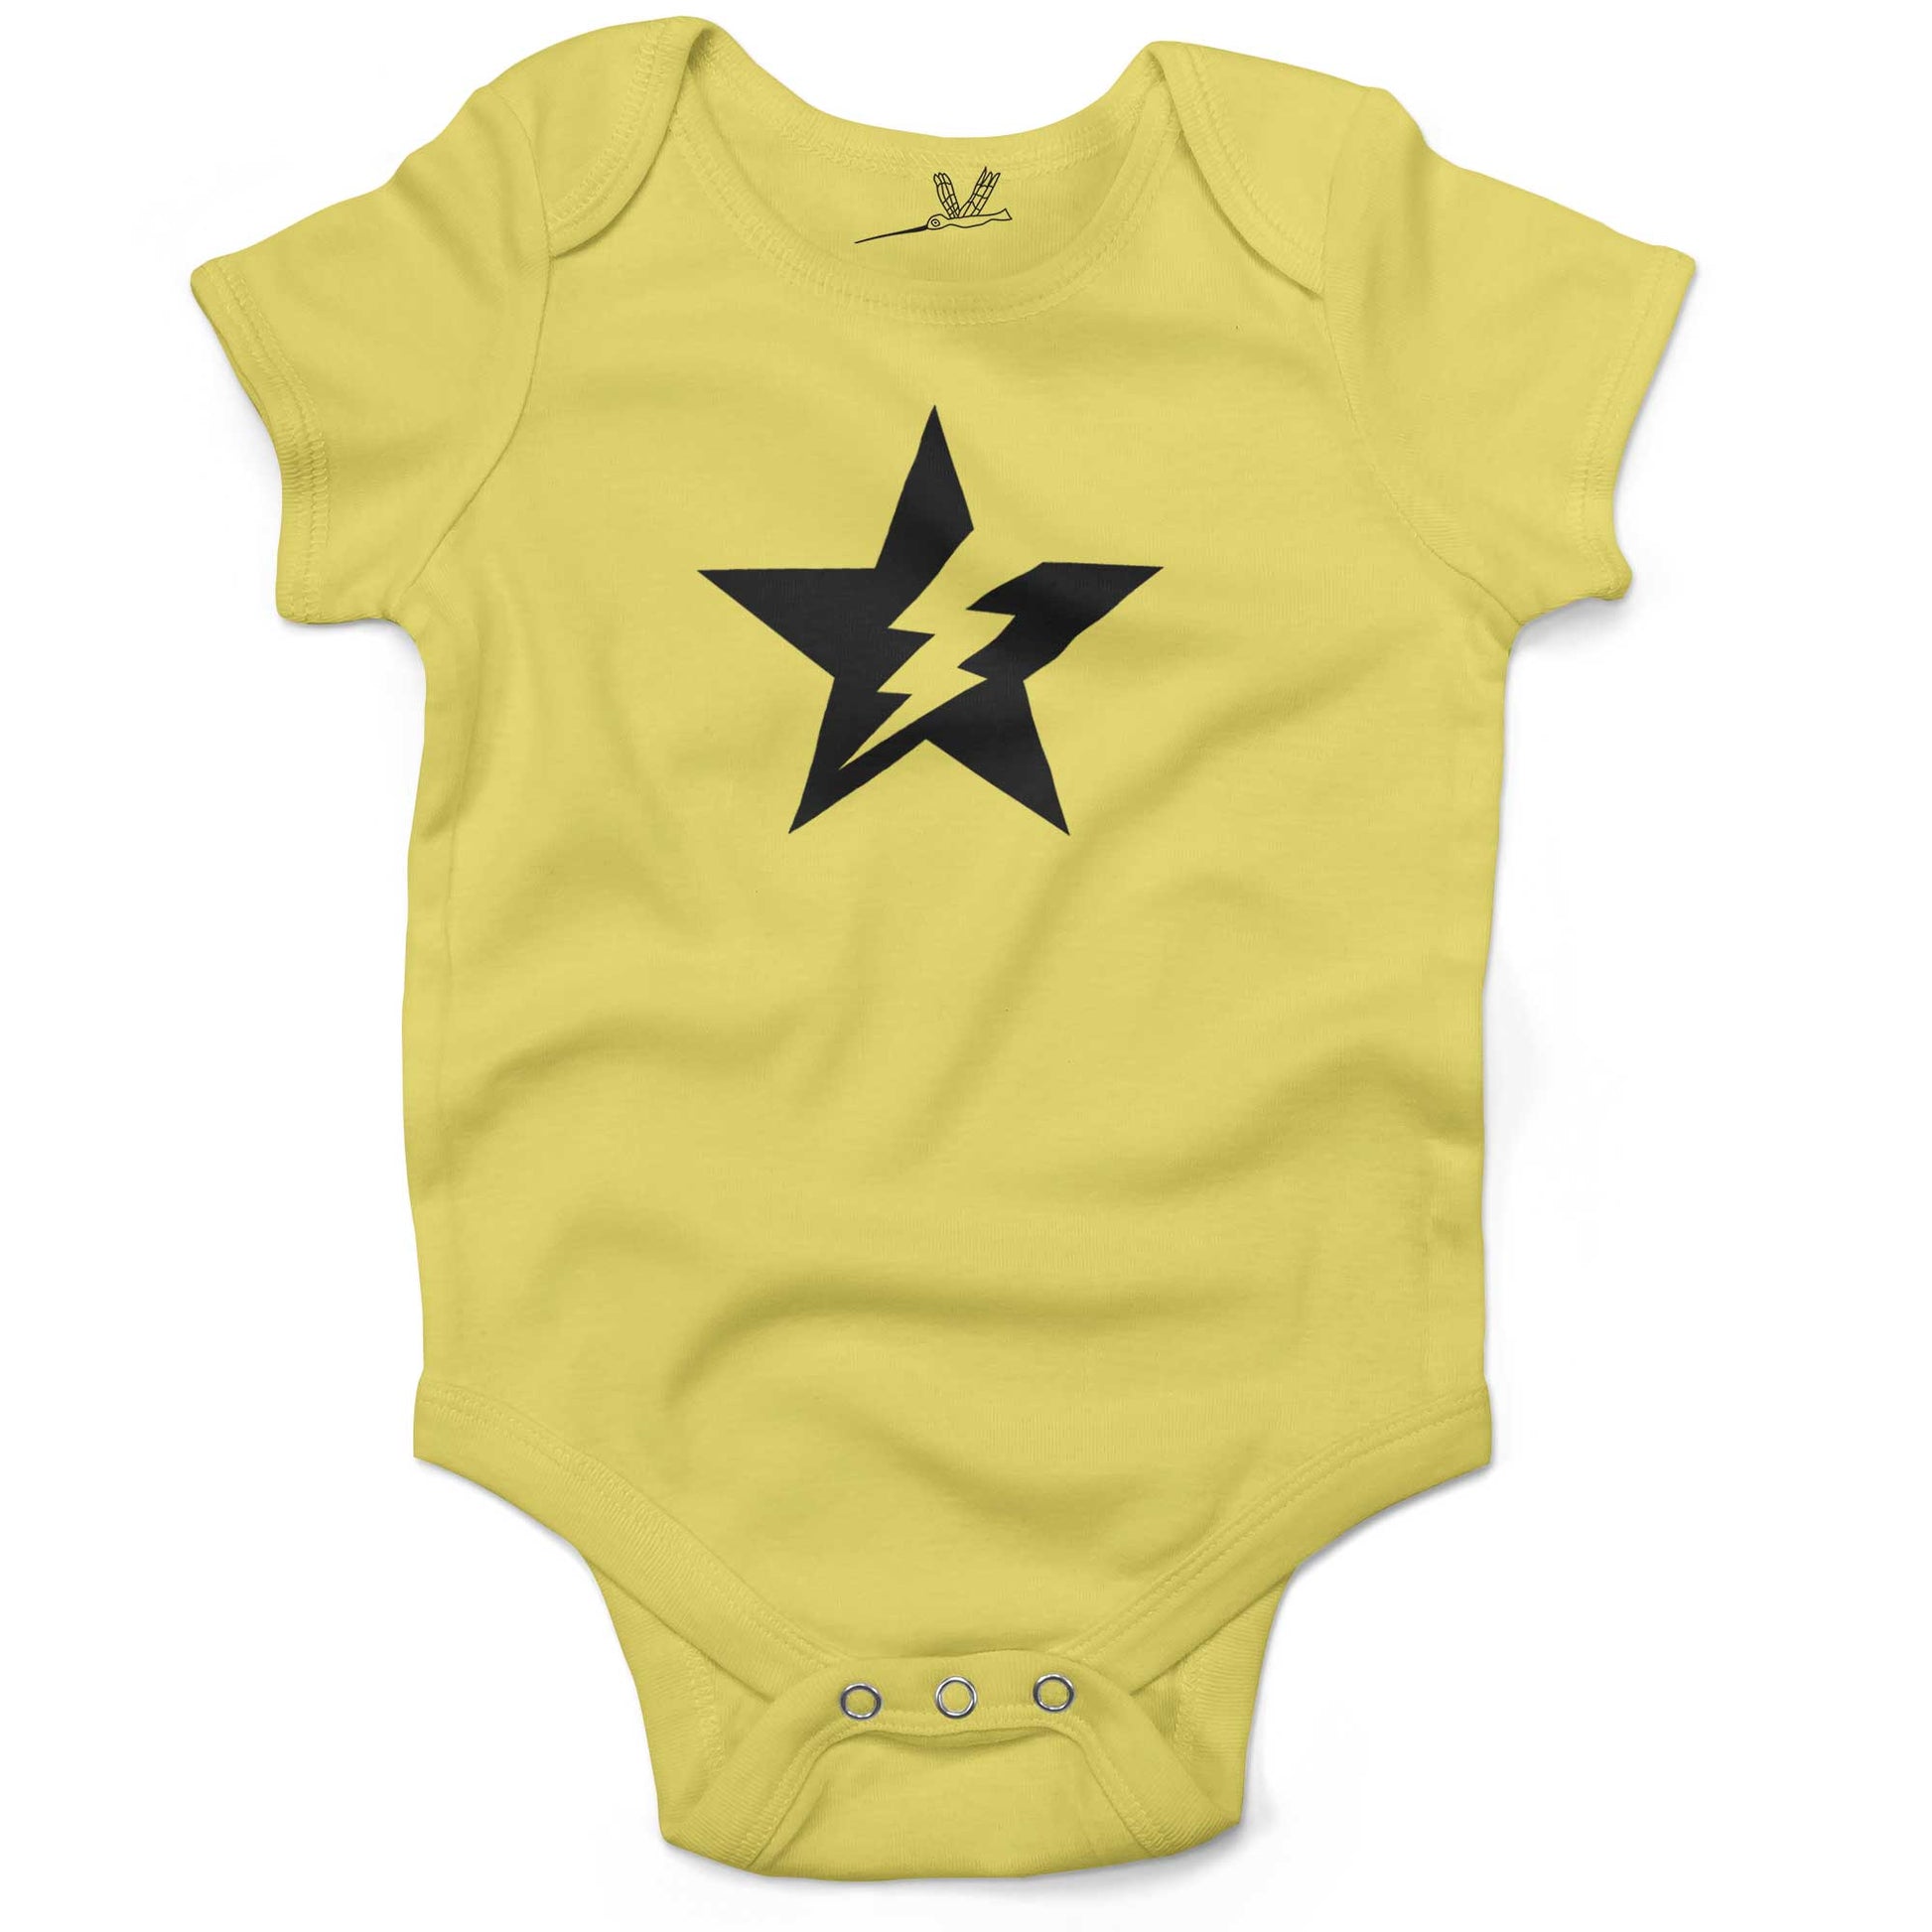 Star Bolt Infant Bodysuit or Raglan Baby Tee-Yellow-3-6 months